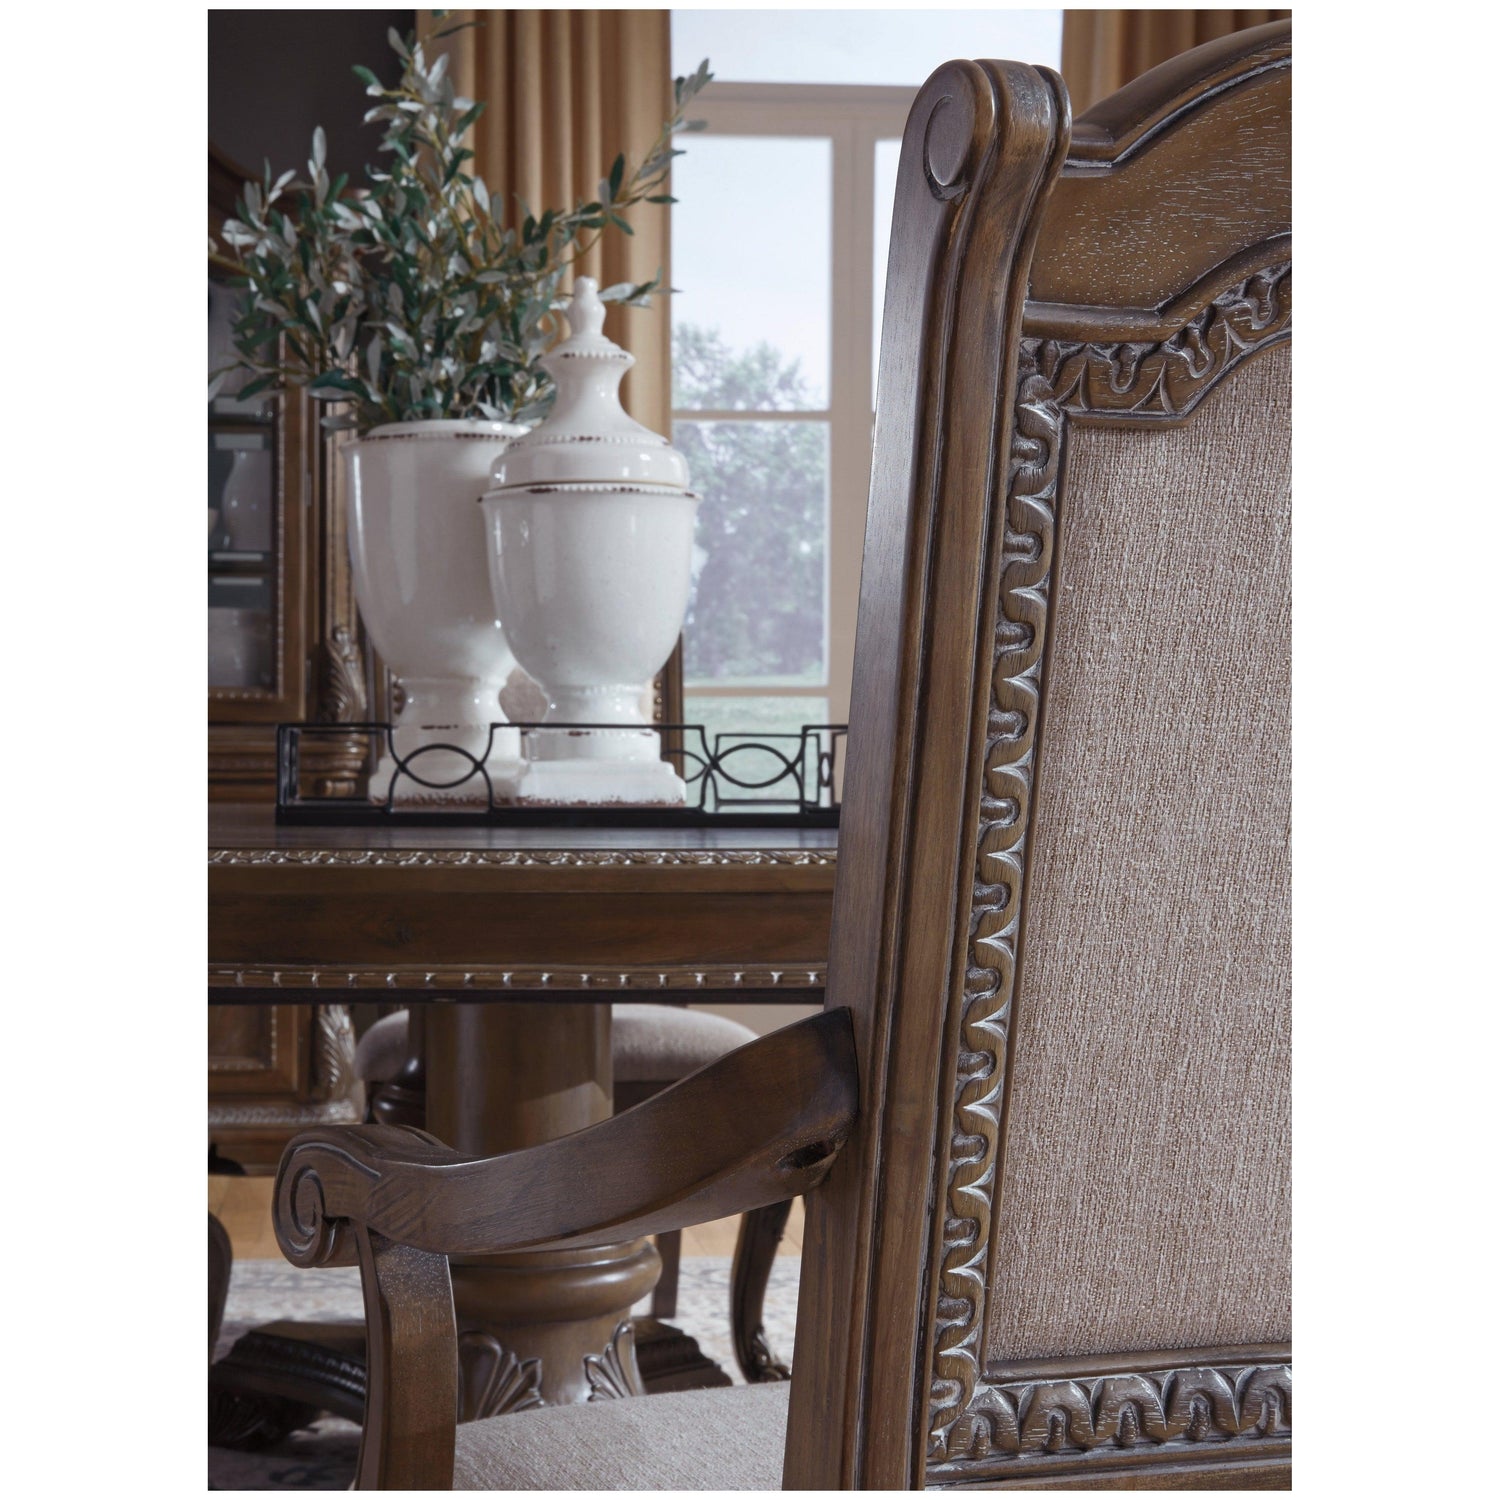 Charmond Dining Chair Ash-D803-01A